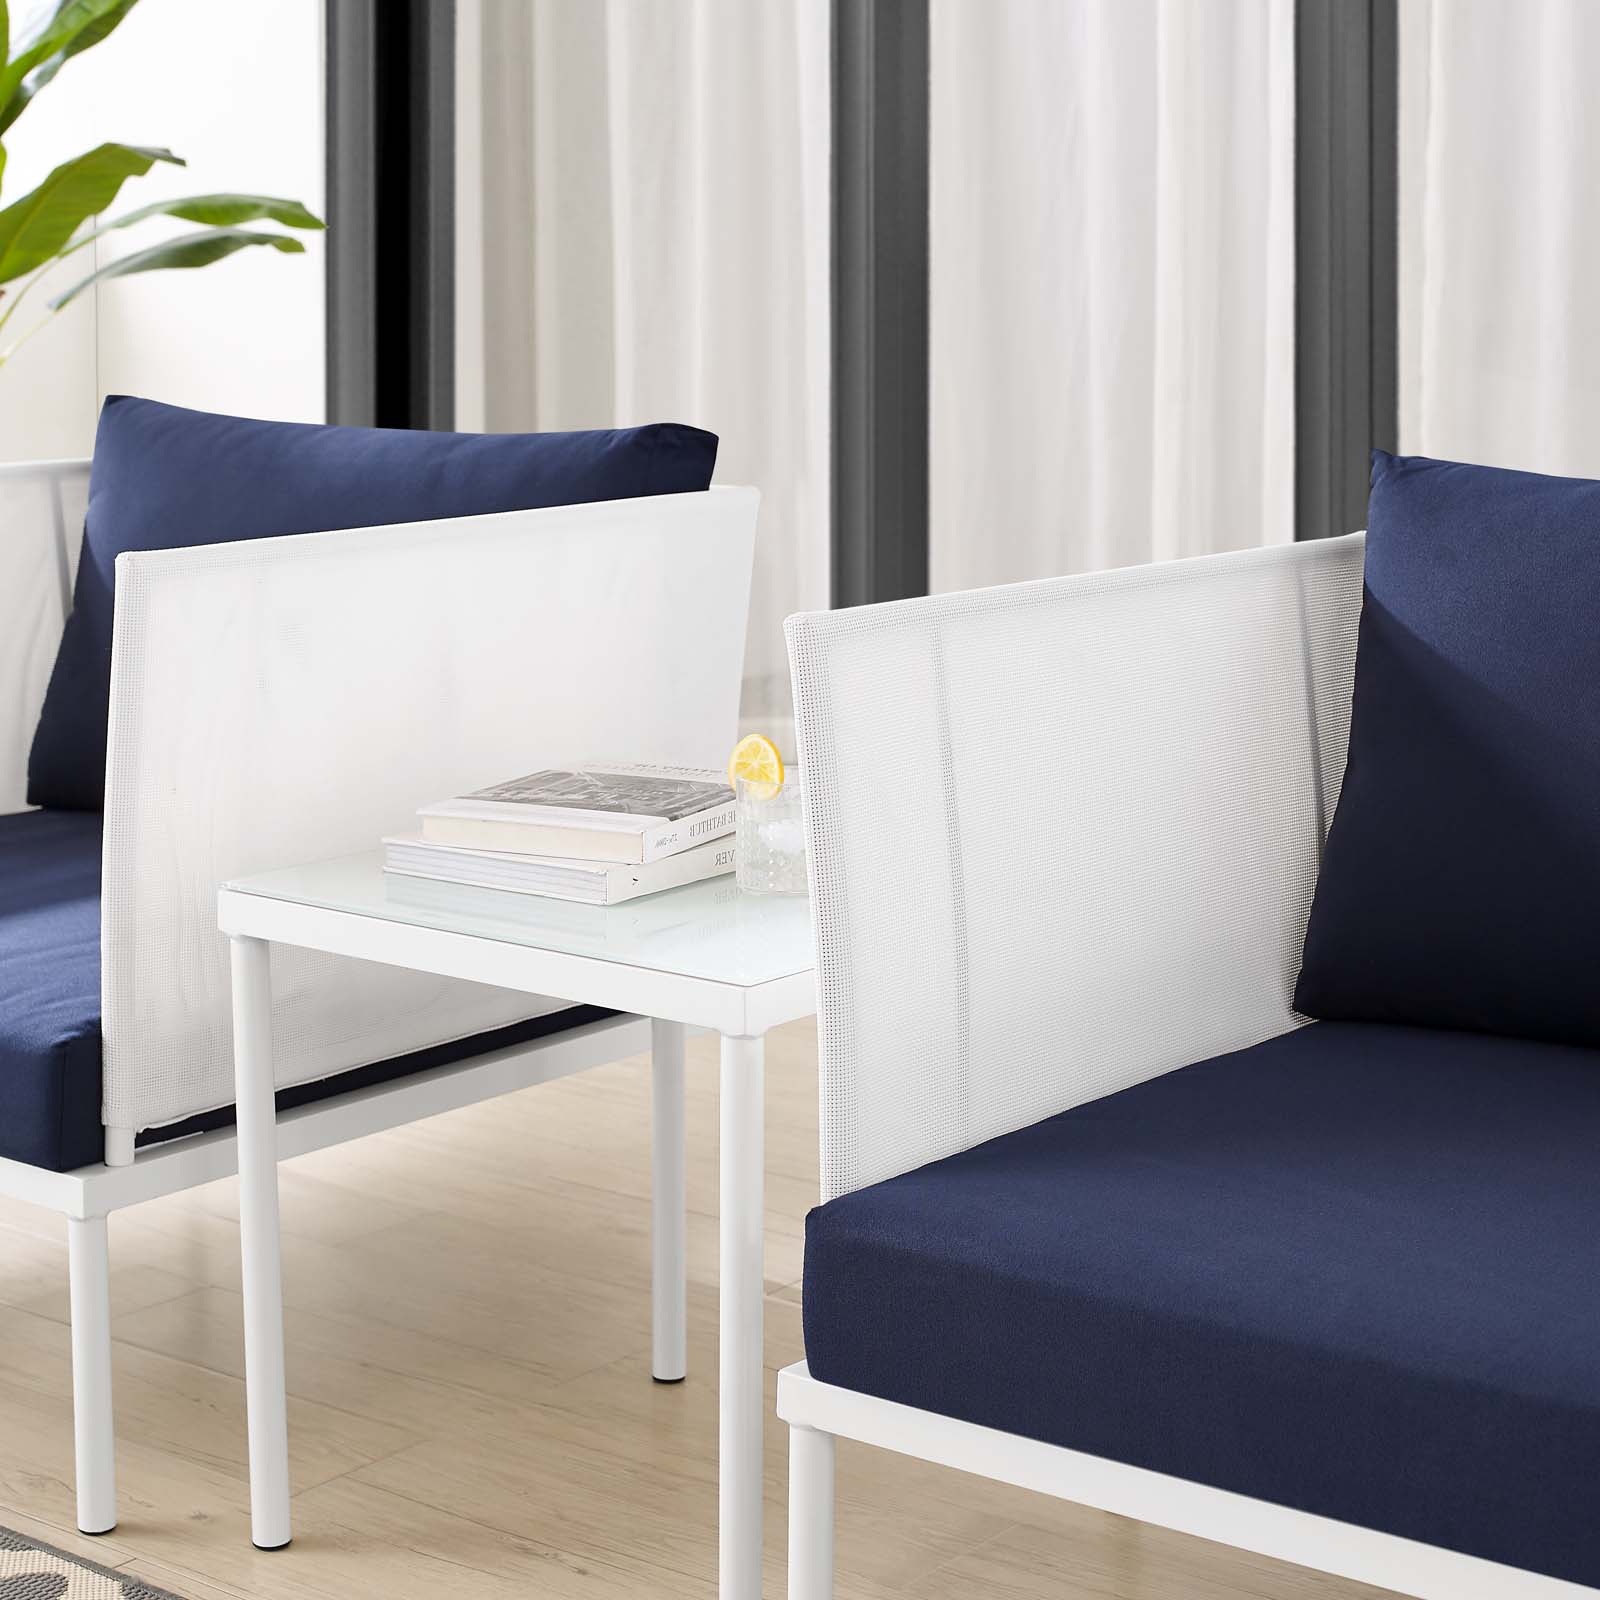 Lounge Chair Table Set, Sunbrella, Aluminum, Metal, Steel, White Blue Navy, Modern Contemporary Urban Design, Outdoor Patio Balcony Cafe Bistro Garden Furniture Hotel Hospitality - image 5 of 10